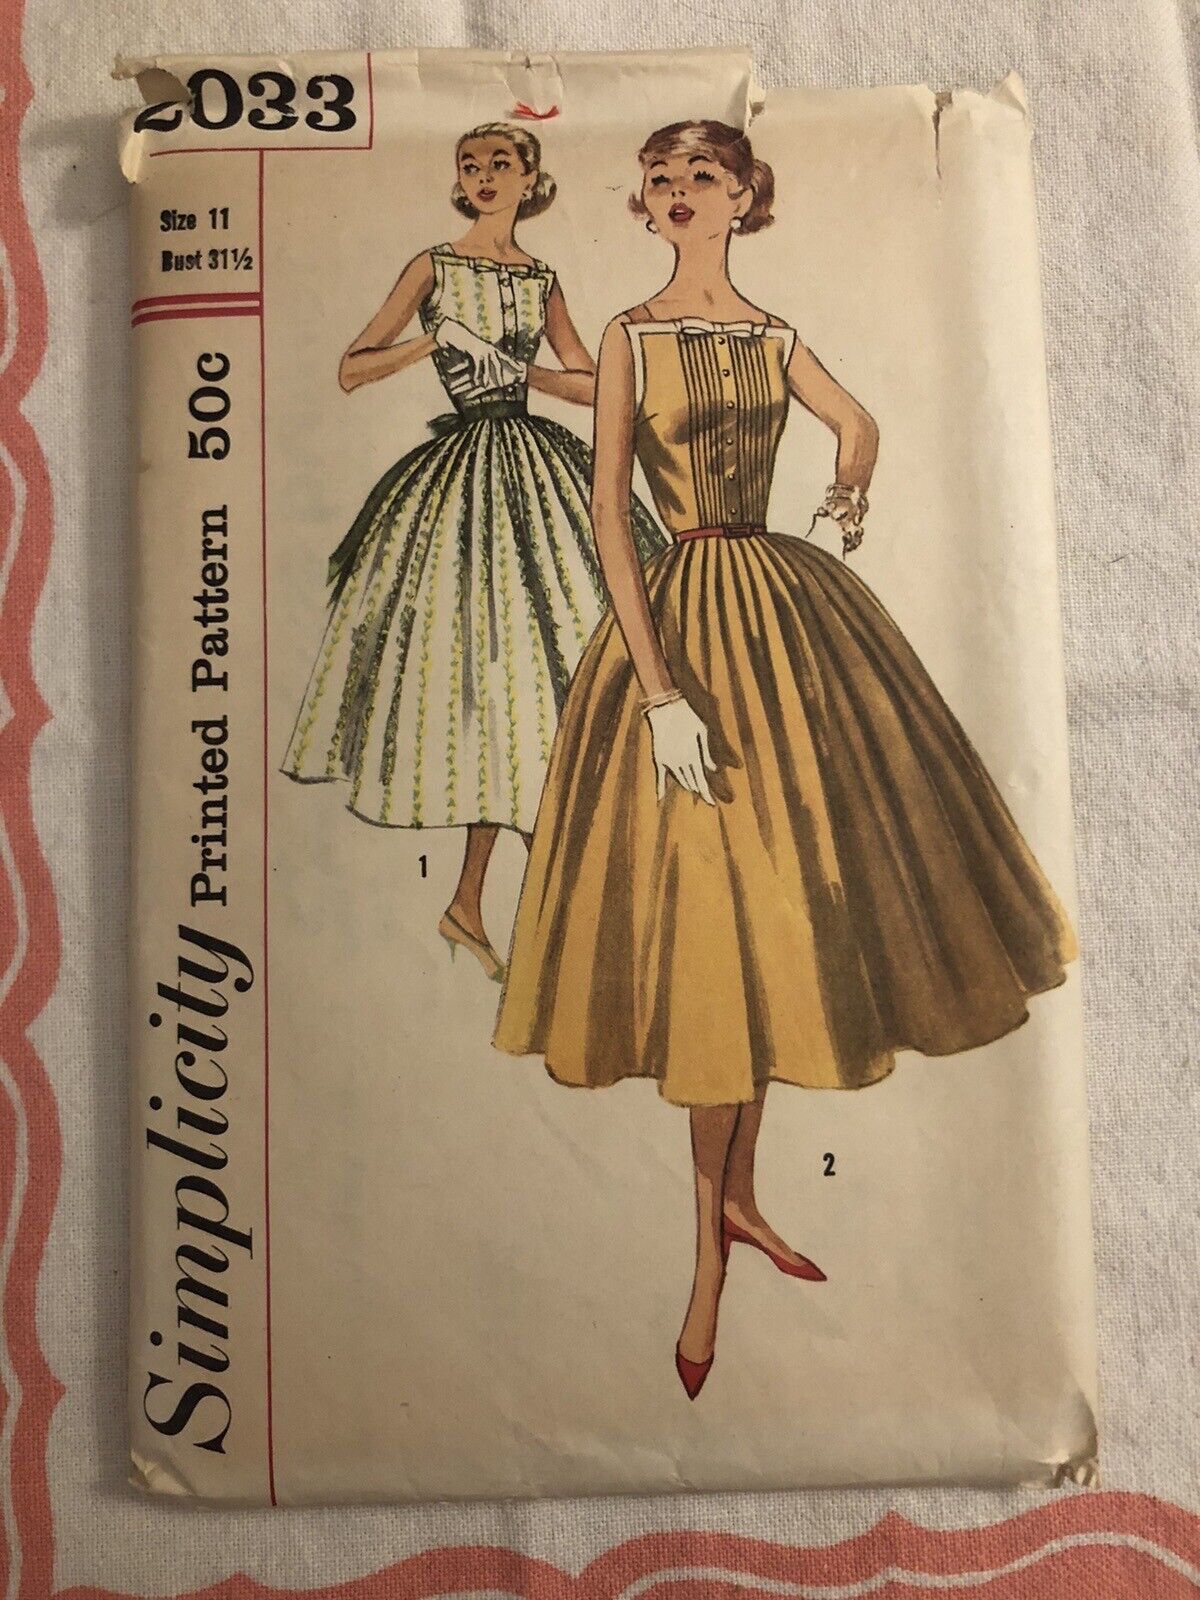 Vintage 1957 SIMPLICITY Pattern 2033 One Piece Dress Size 11 Bust 31 1/2